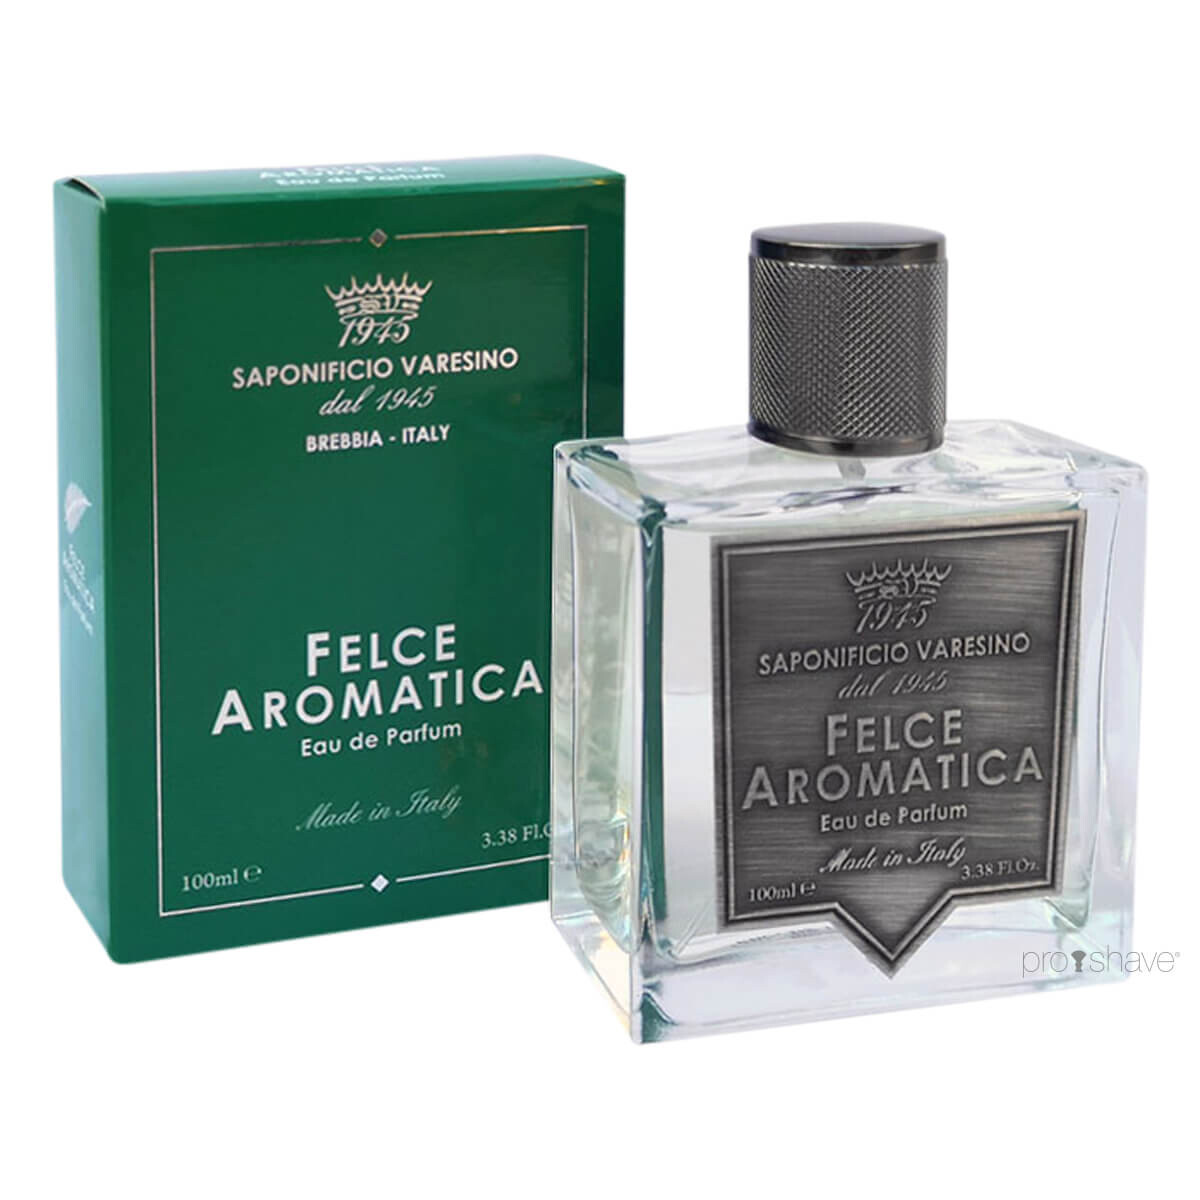 Se Saponificio Varesino Eau de Parfum, Felce Aromatica, 100 ml. hos Proshave